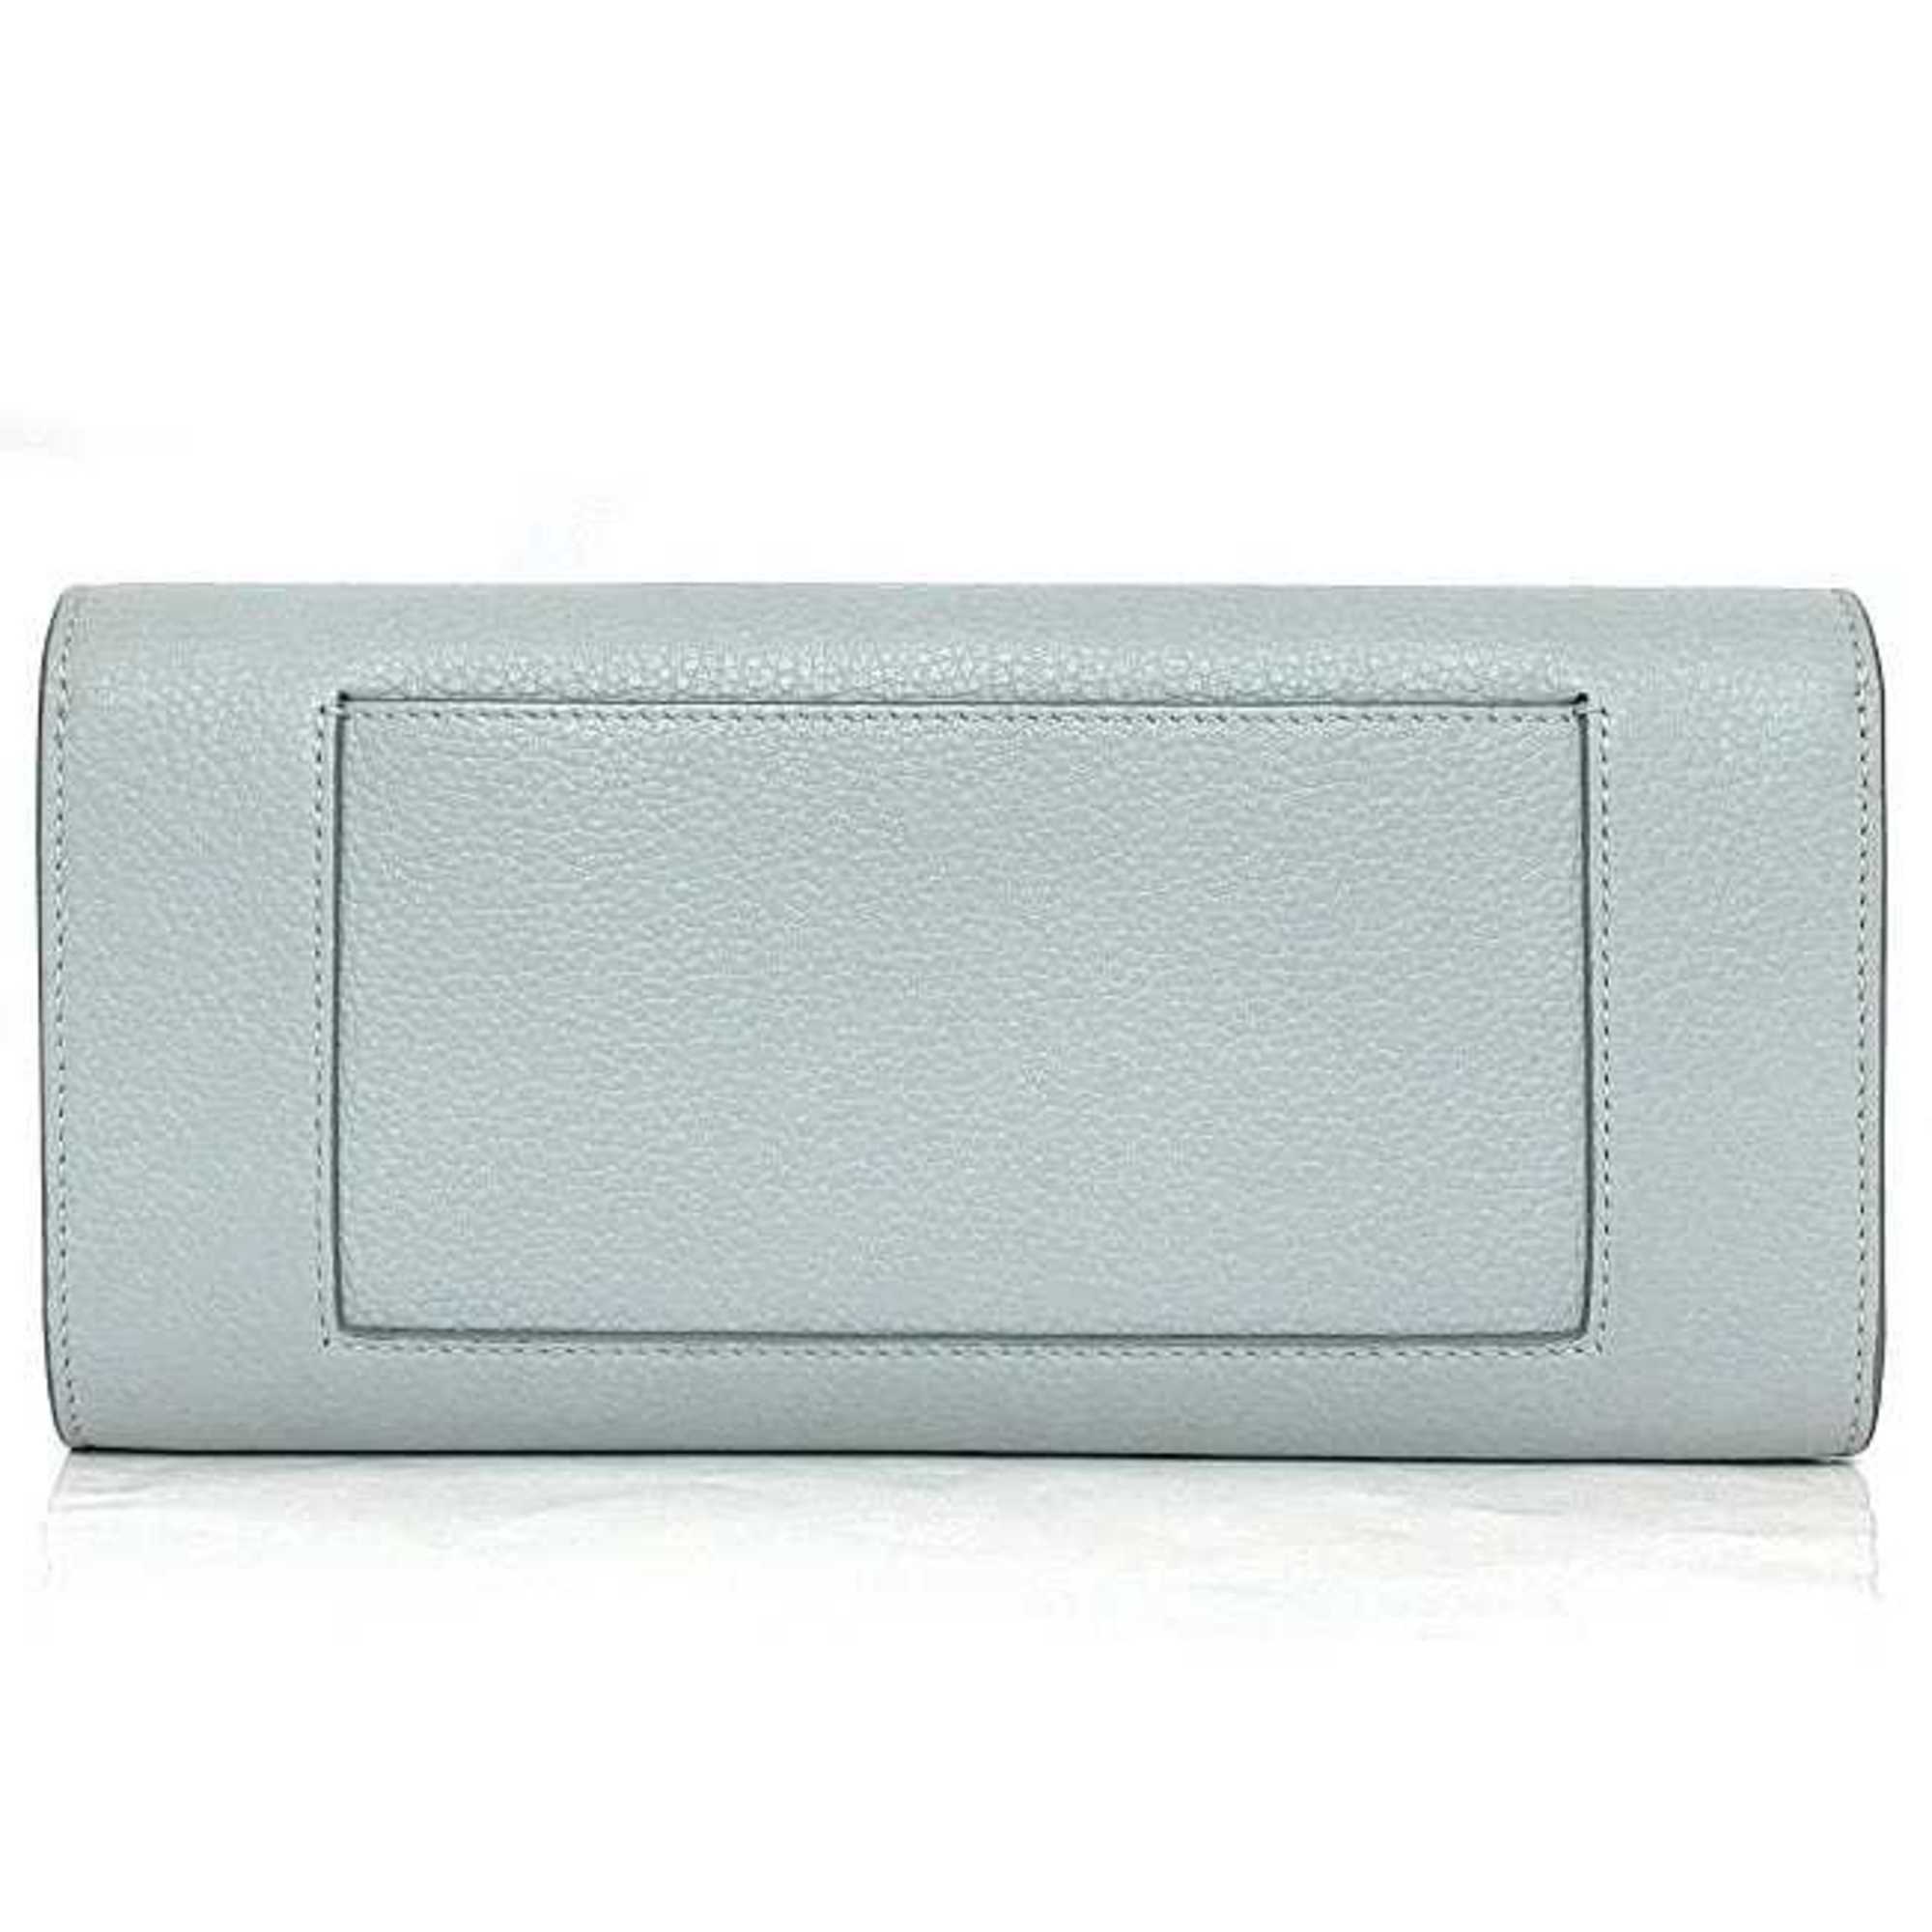 CELINE Bifold Long Wallet Large Flap Multi-Function Light Blue 101673AU8 05FR Leather Grain Women's